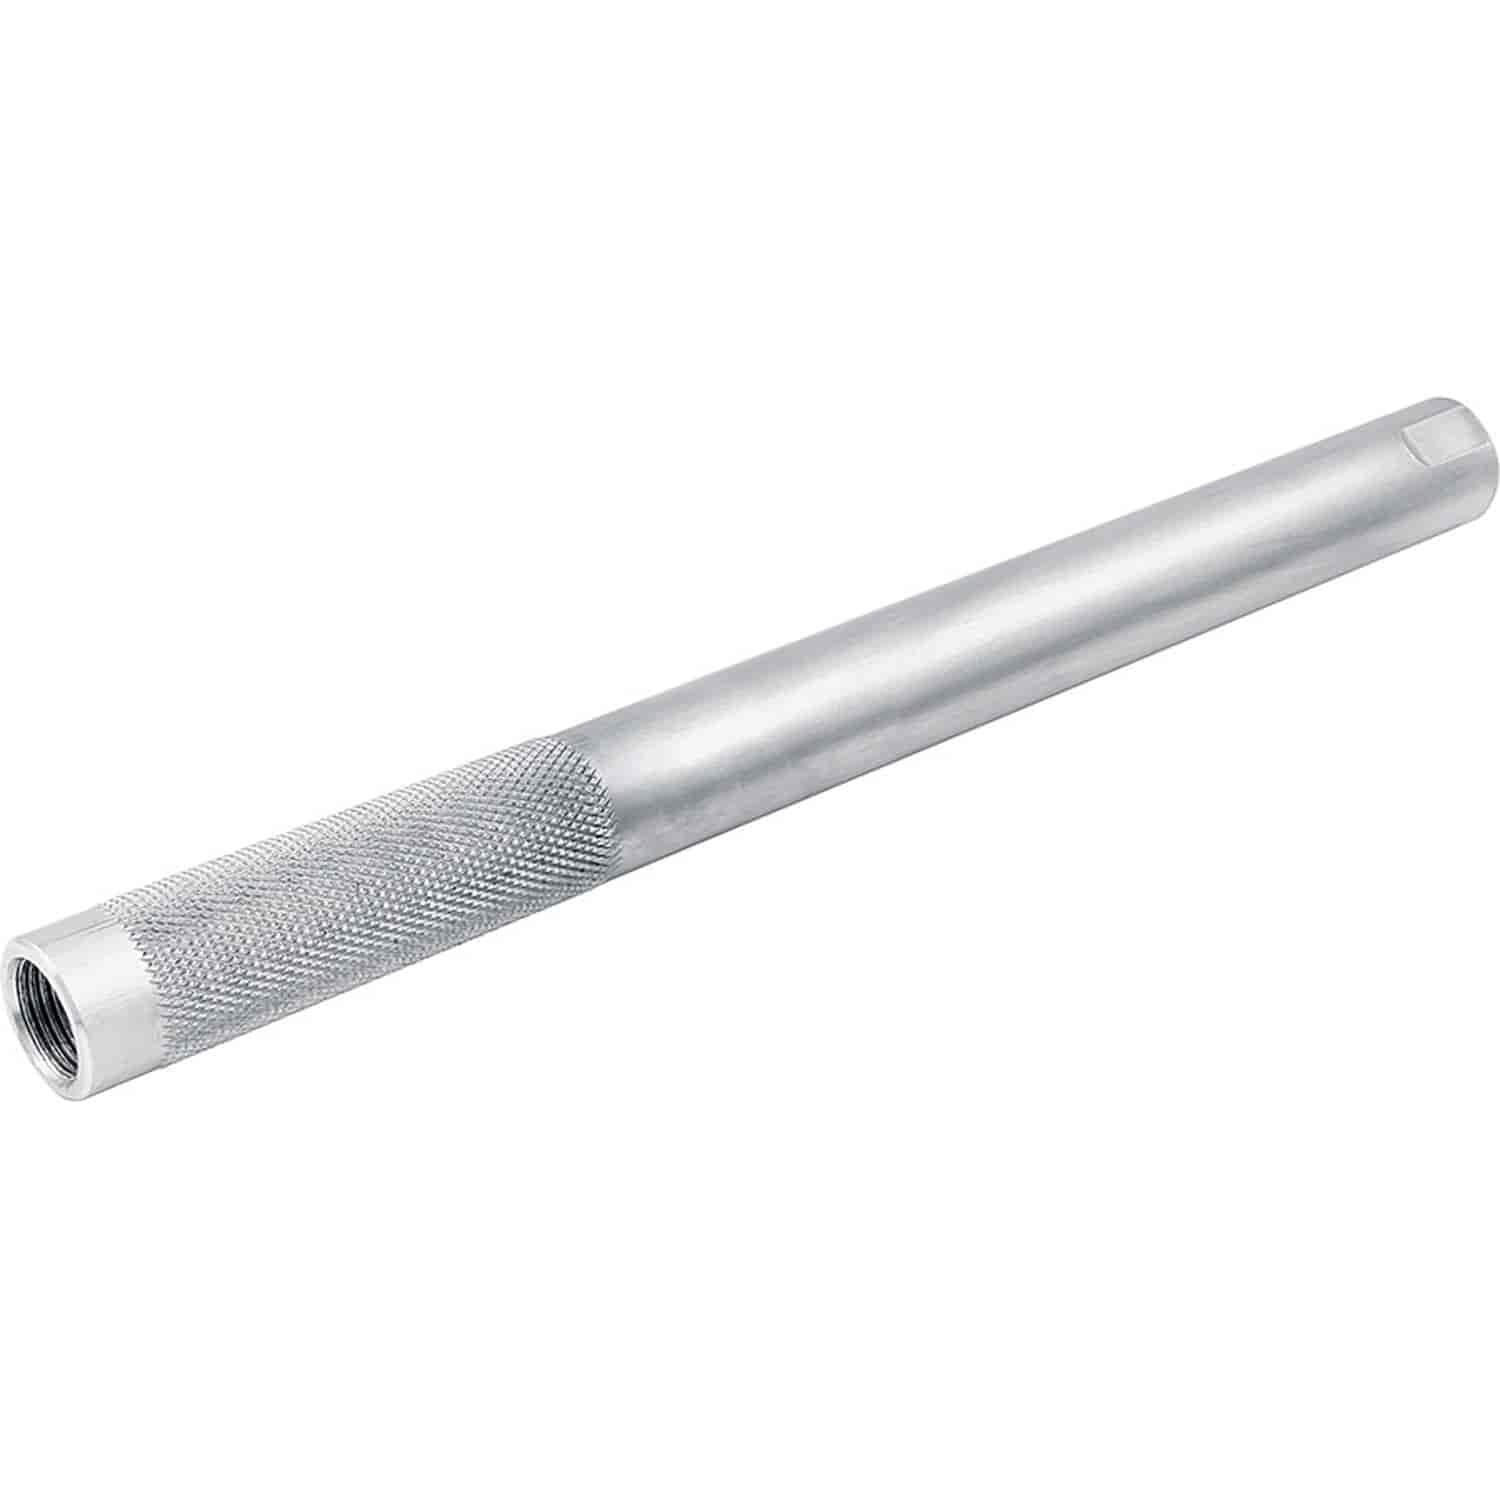 Swedged Aluminum Tie Rod Tube Length: 6